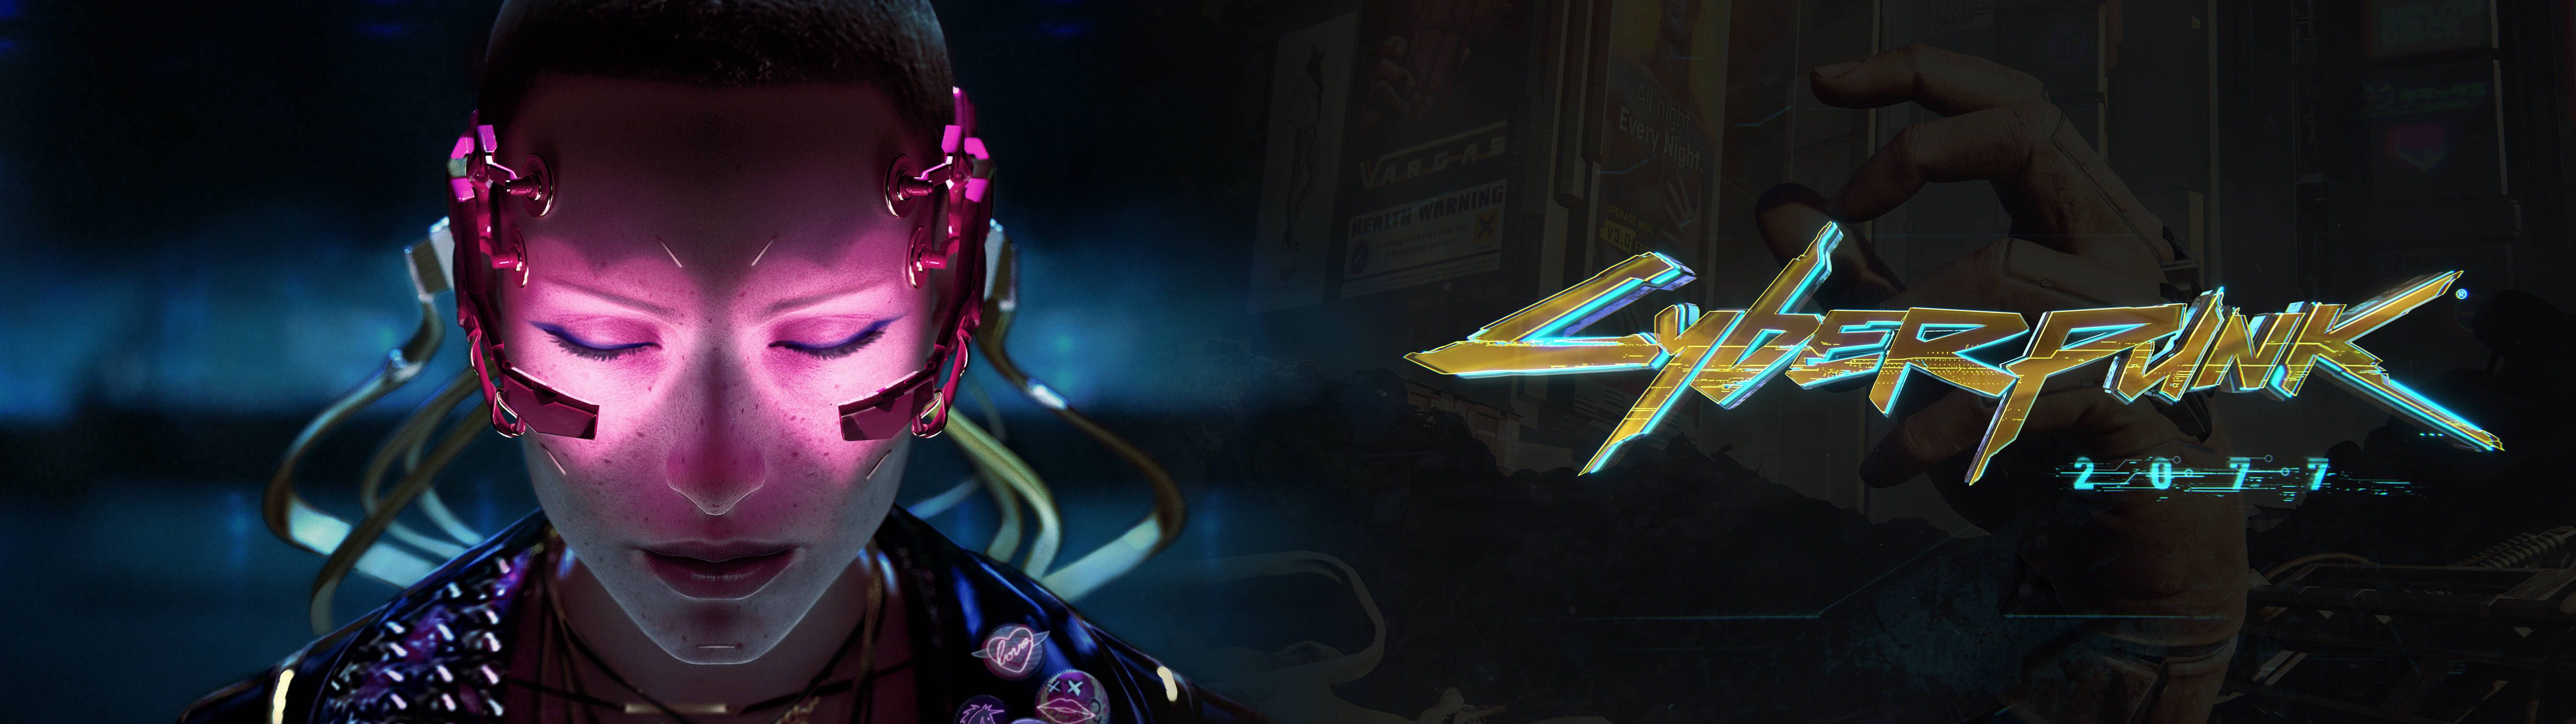 Cyberpunk 2077 wallpaper - A cybernetic geisha with glowing eyes and a glowing Cyberpunk logo - 5120x1440